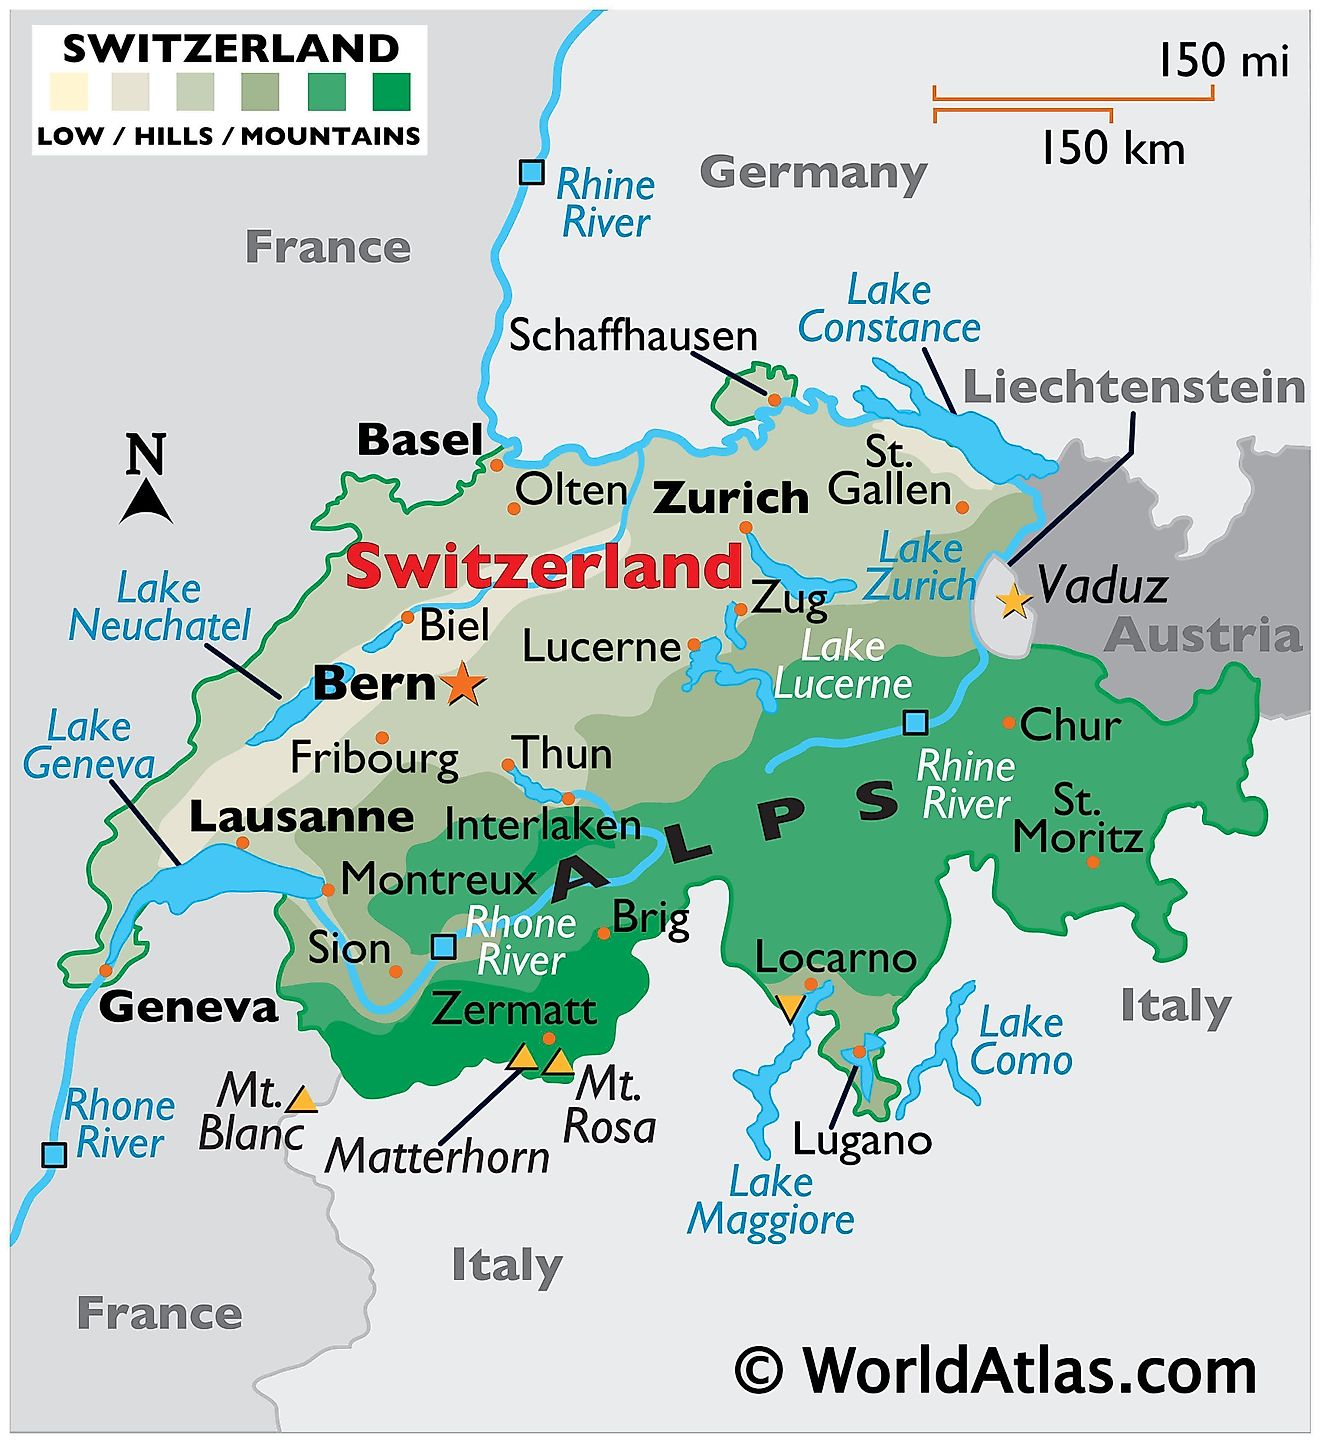 Switzerland Maps Facts World Atlas